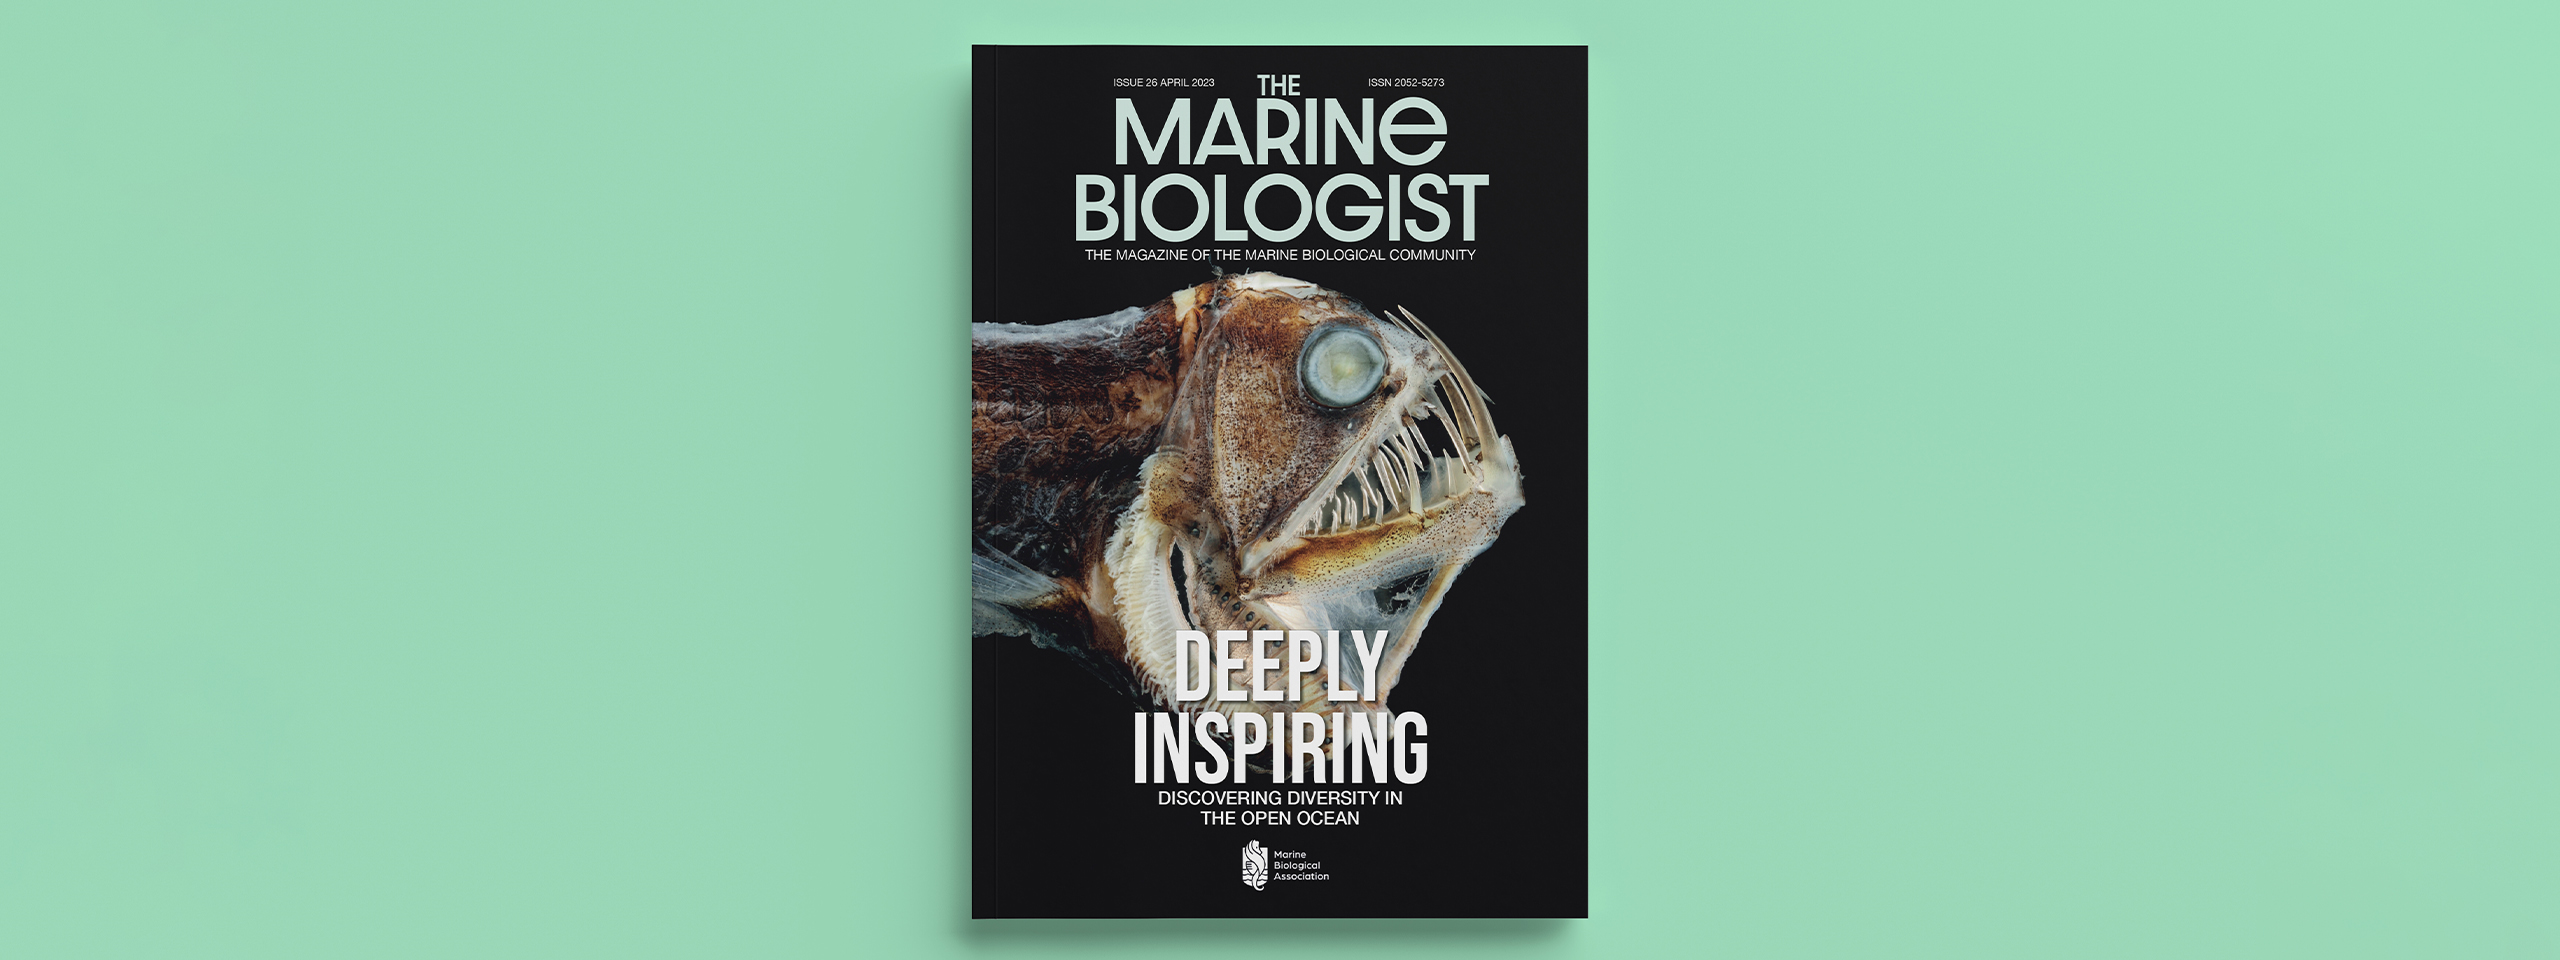 The Marine Biologist latest issue - Deeply inspiring